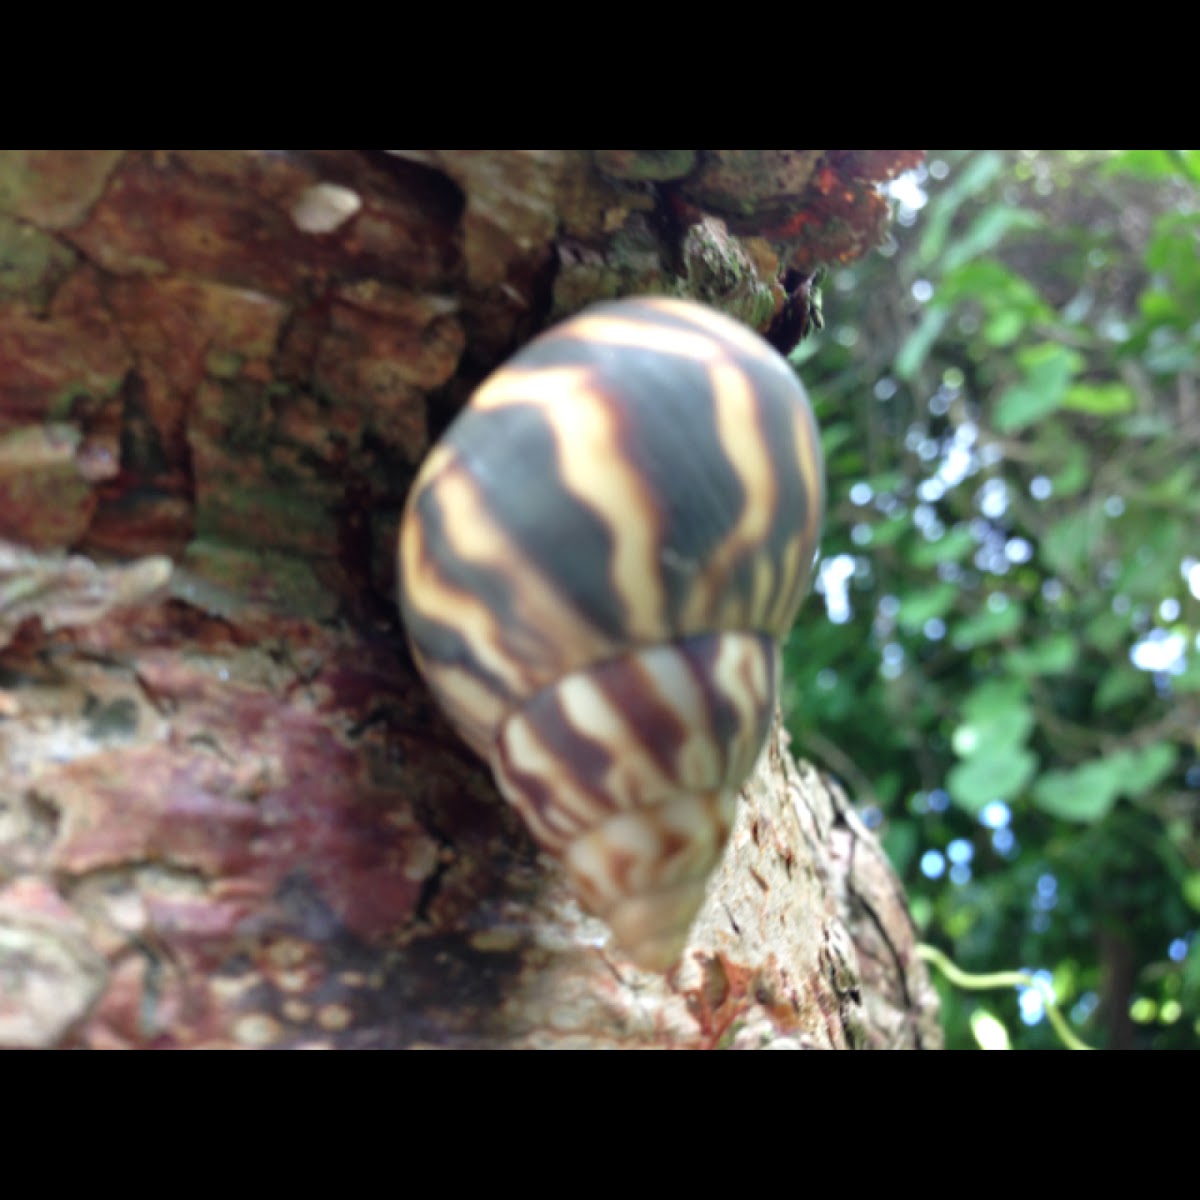 Stock island tree snail